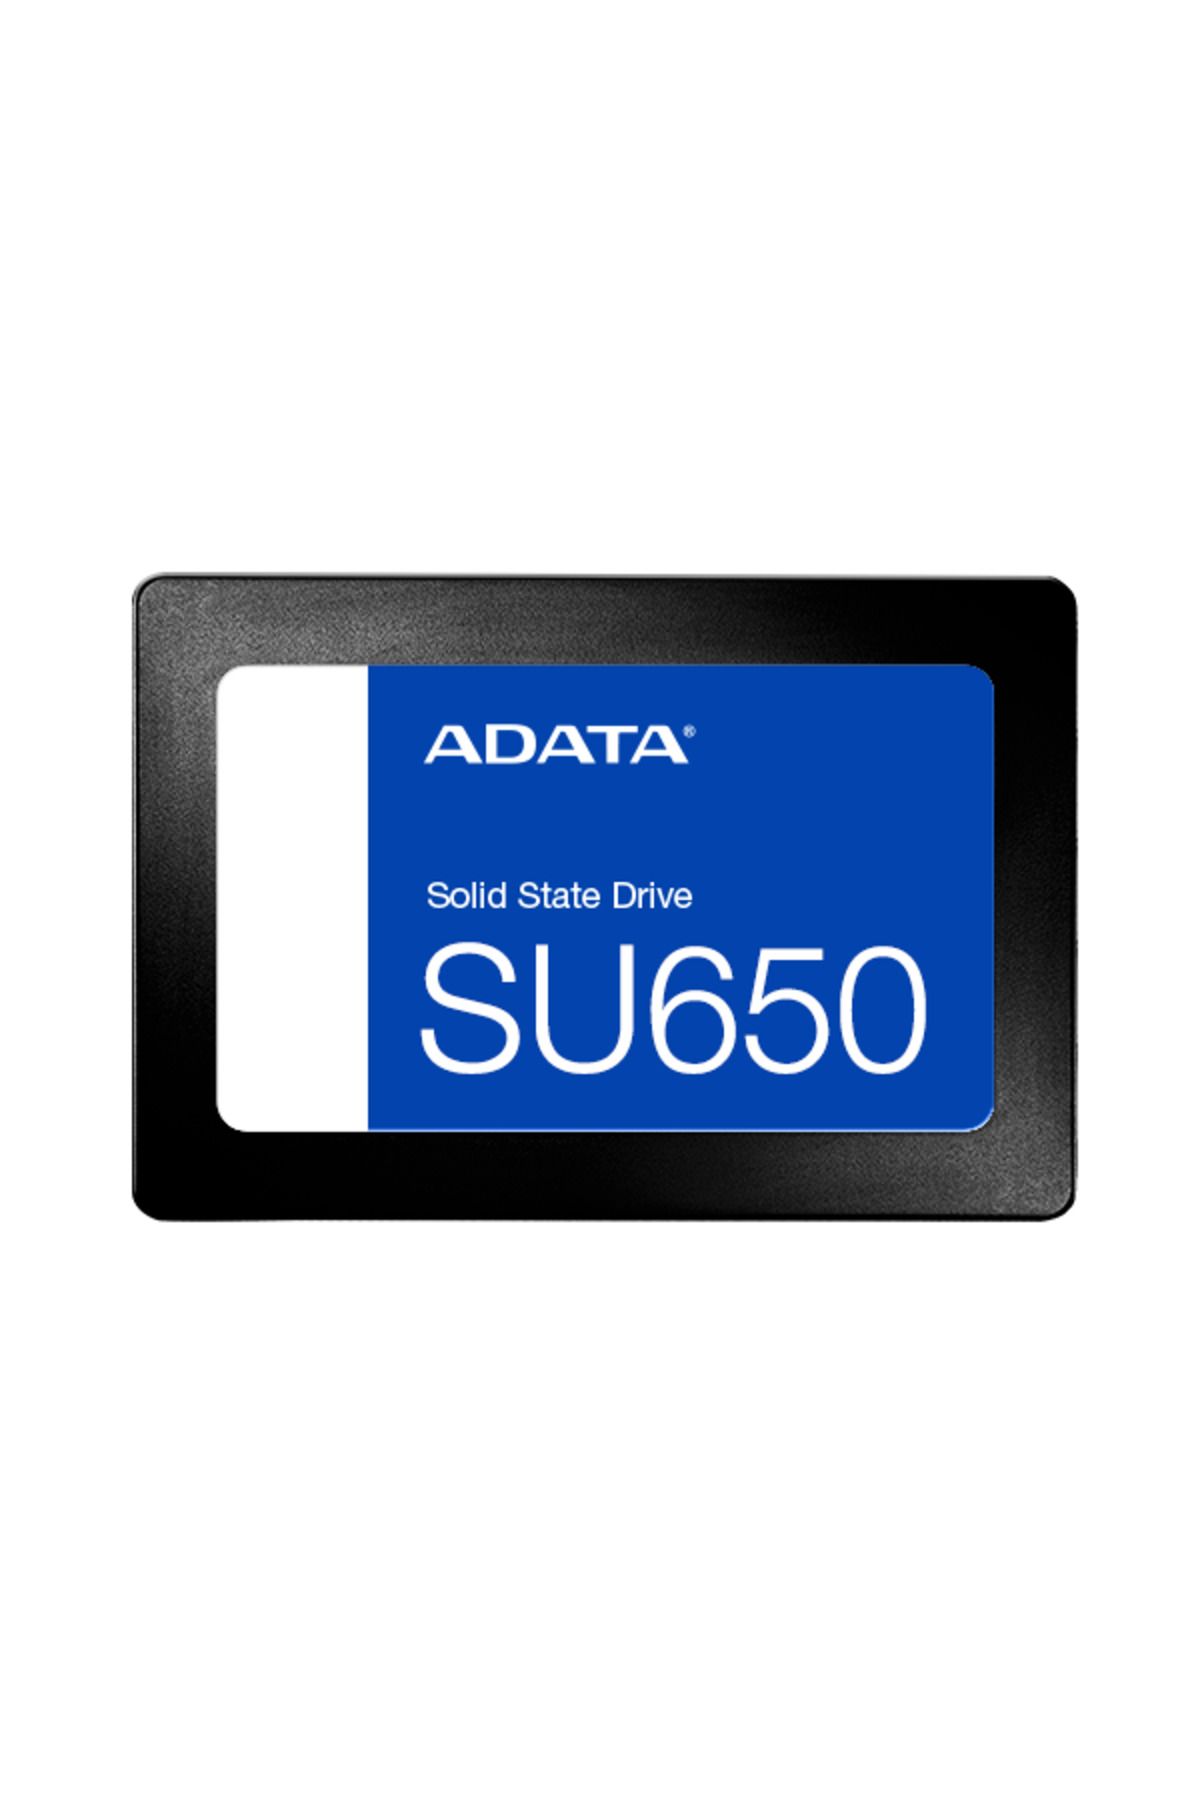 Adata 120GB 2.5" SU650 520-320MB-s ASU650SS-120GT-R Ssd Harddisk